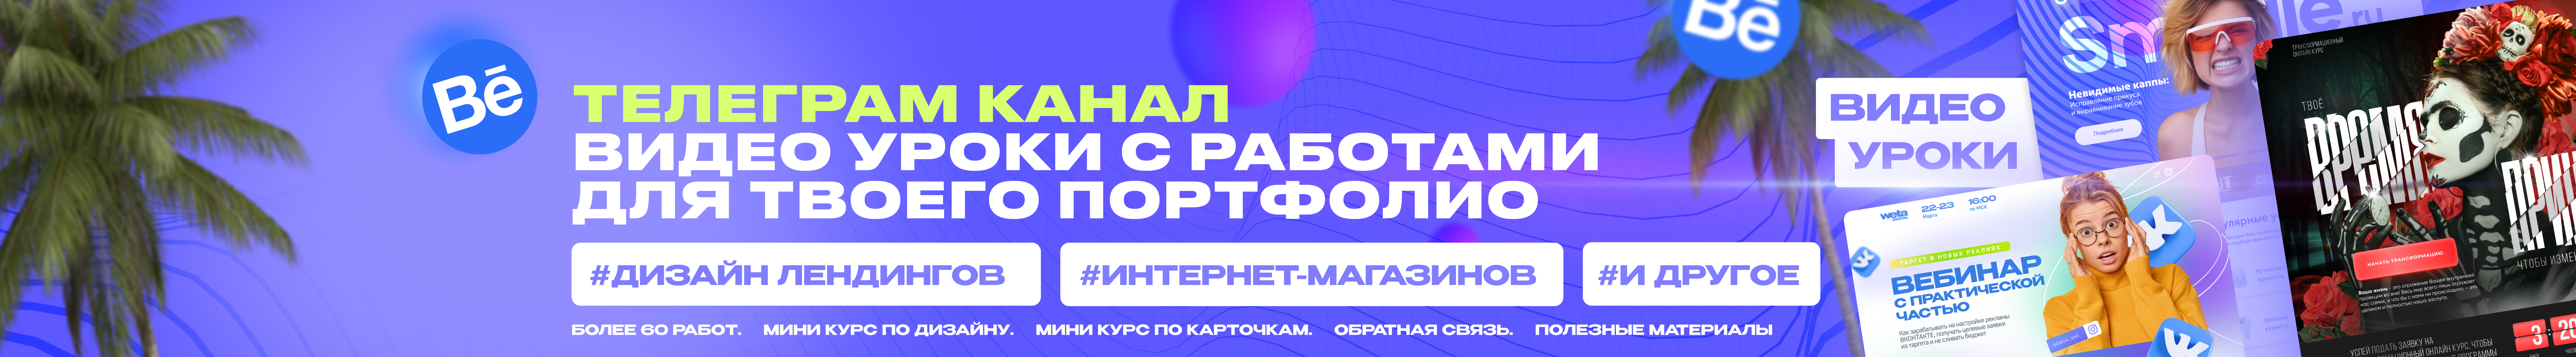 Vladislav Kovalchuk's profile banner